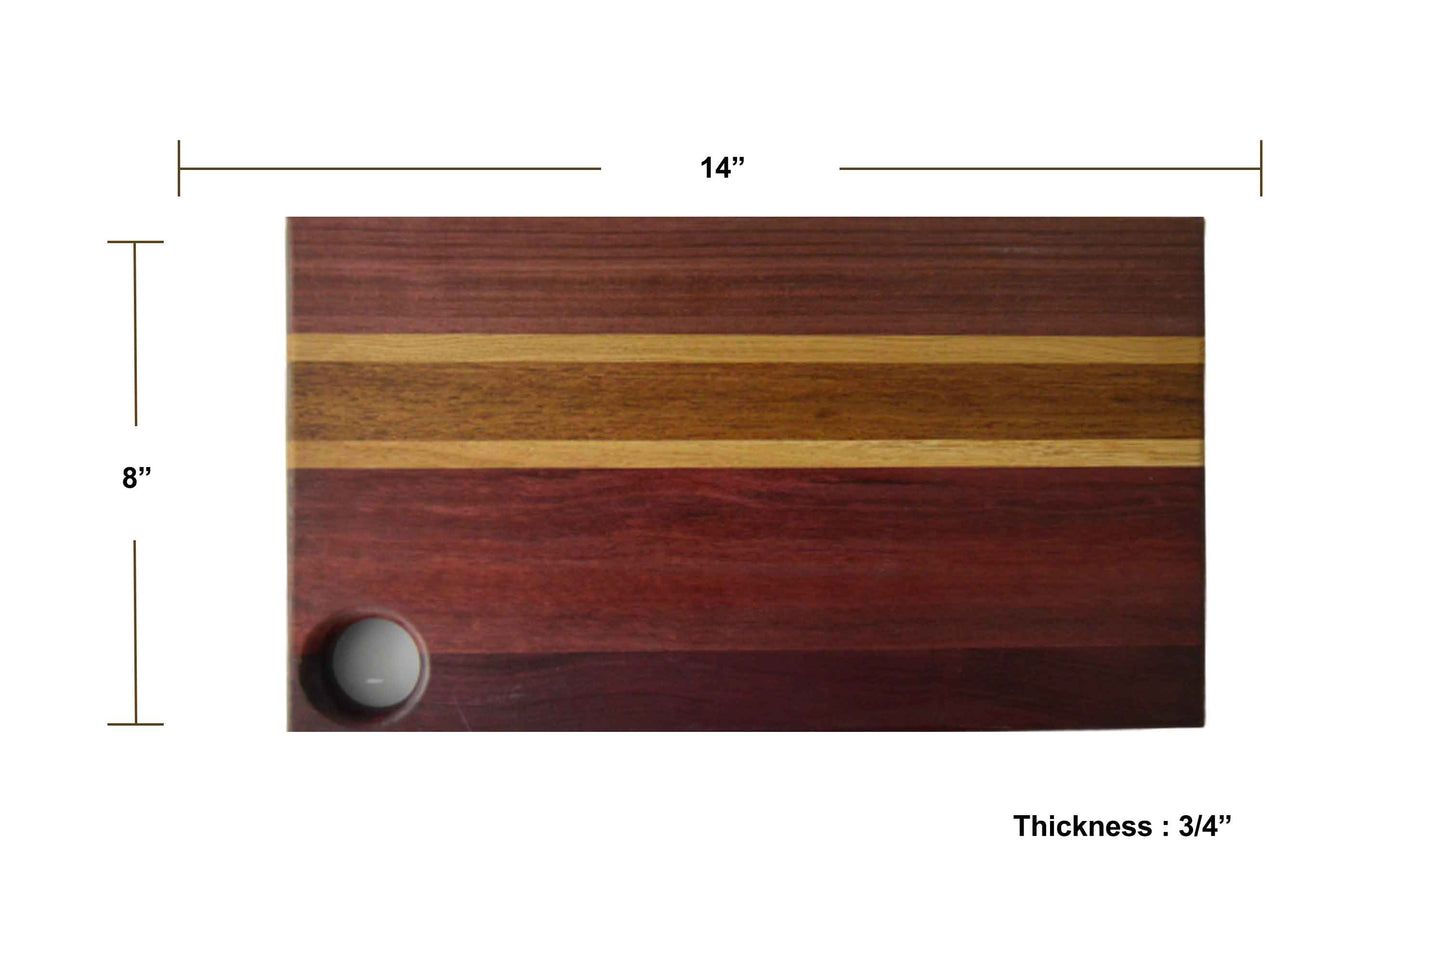 Charcuterie Wood Board - Earth Shape